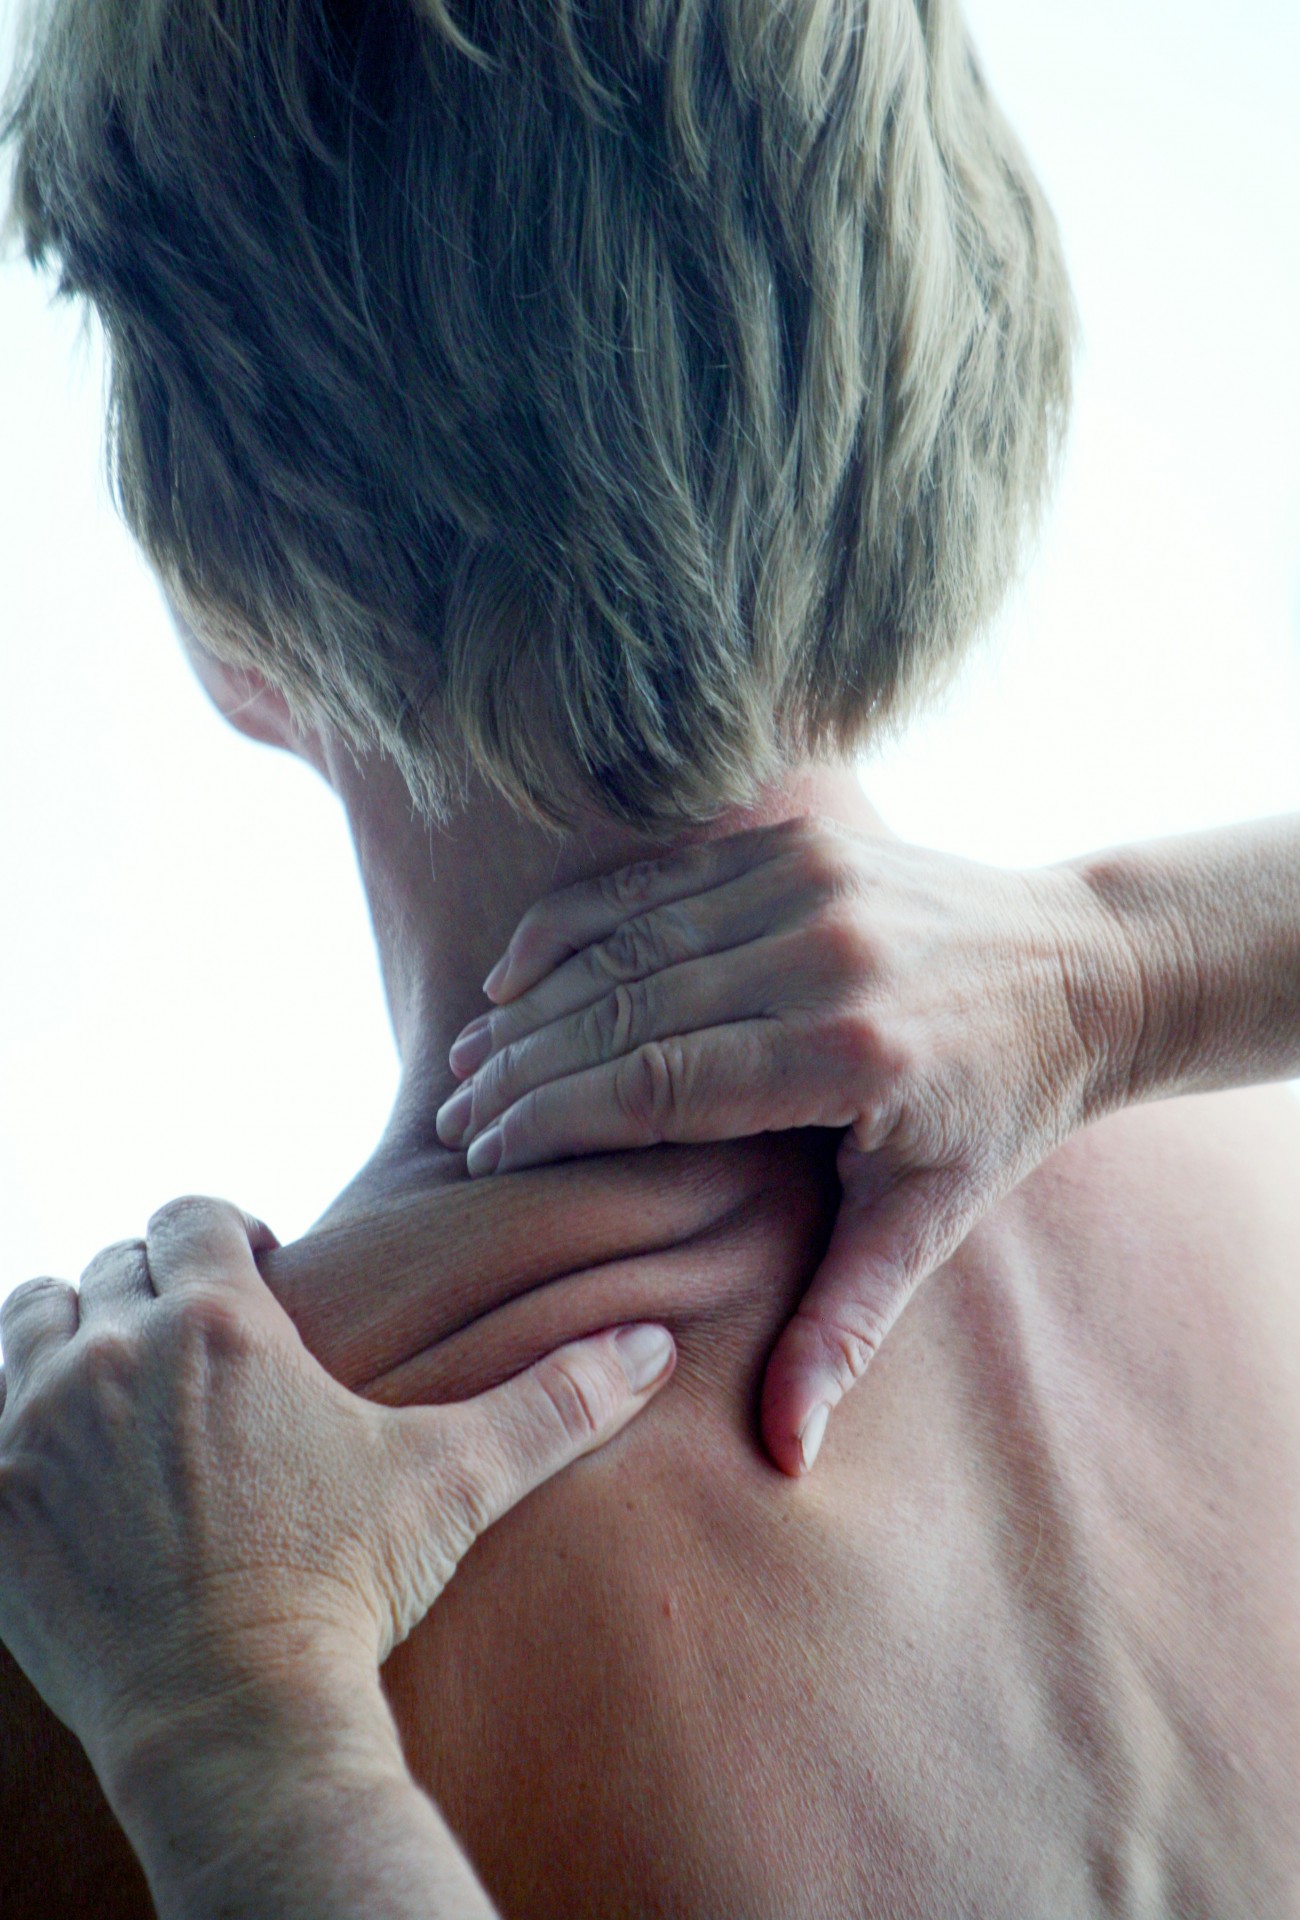 masser épaule - ecole de massage sensitif belge